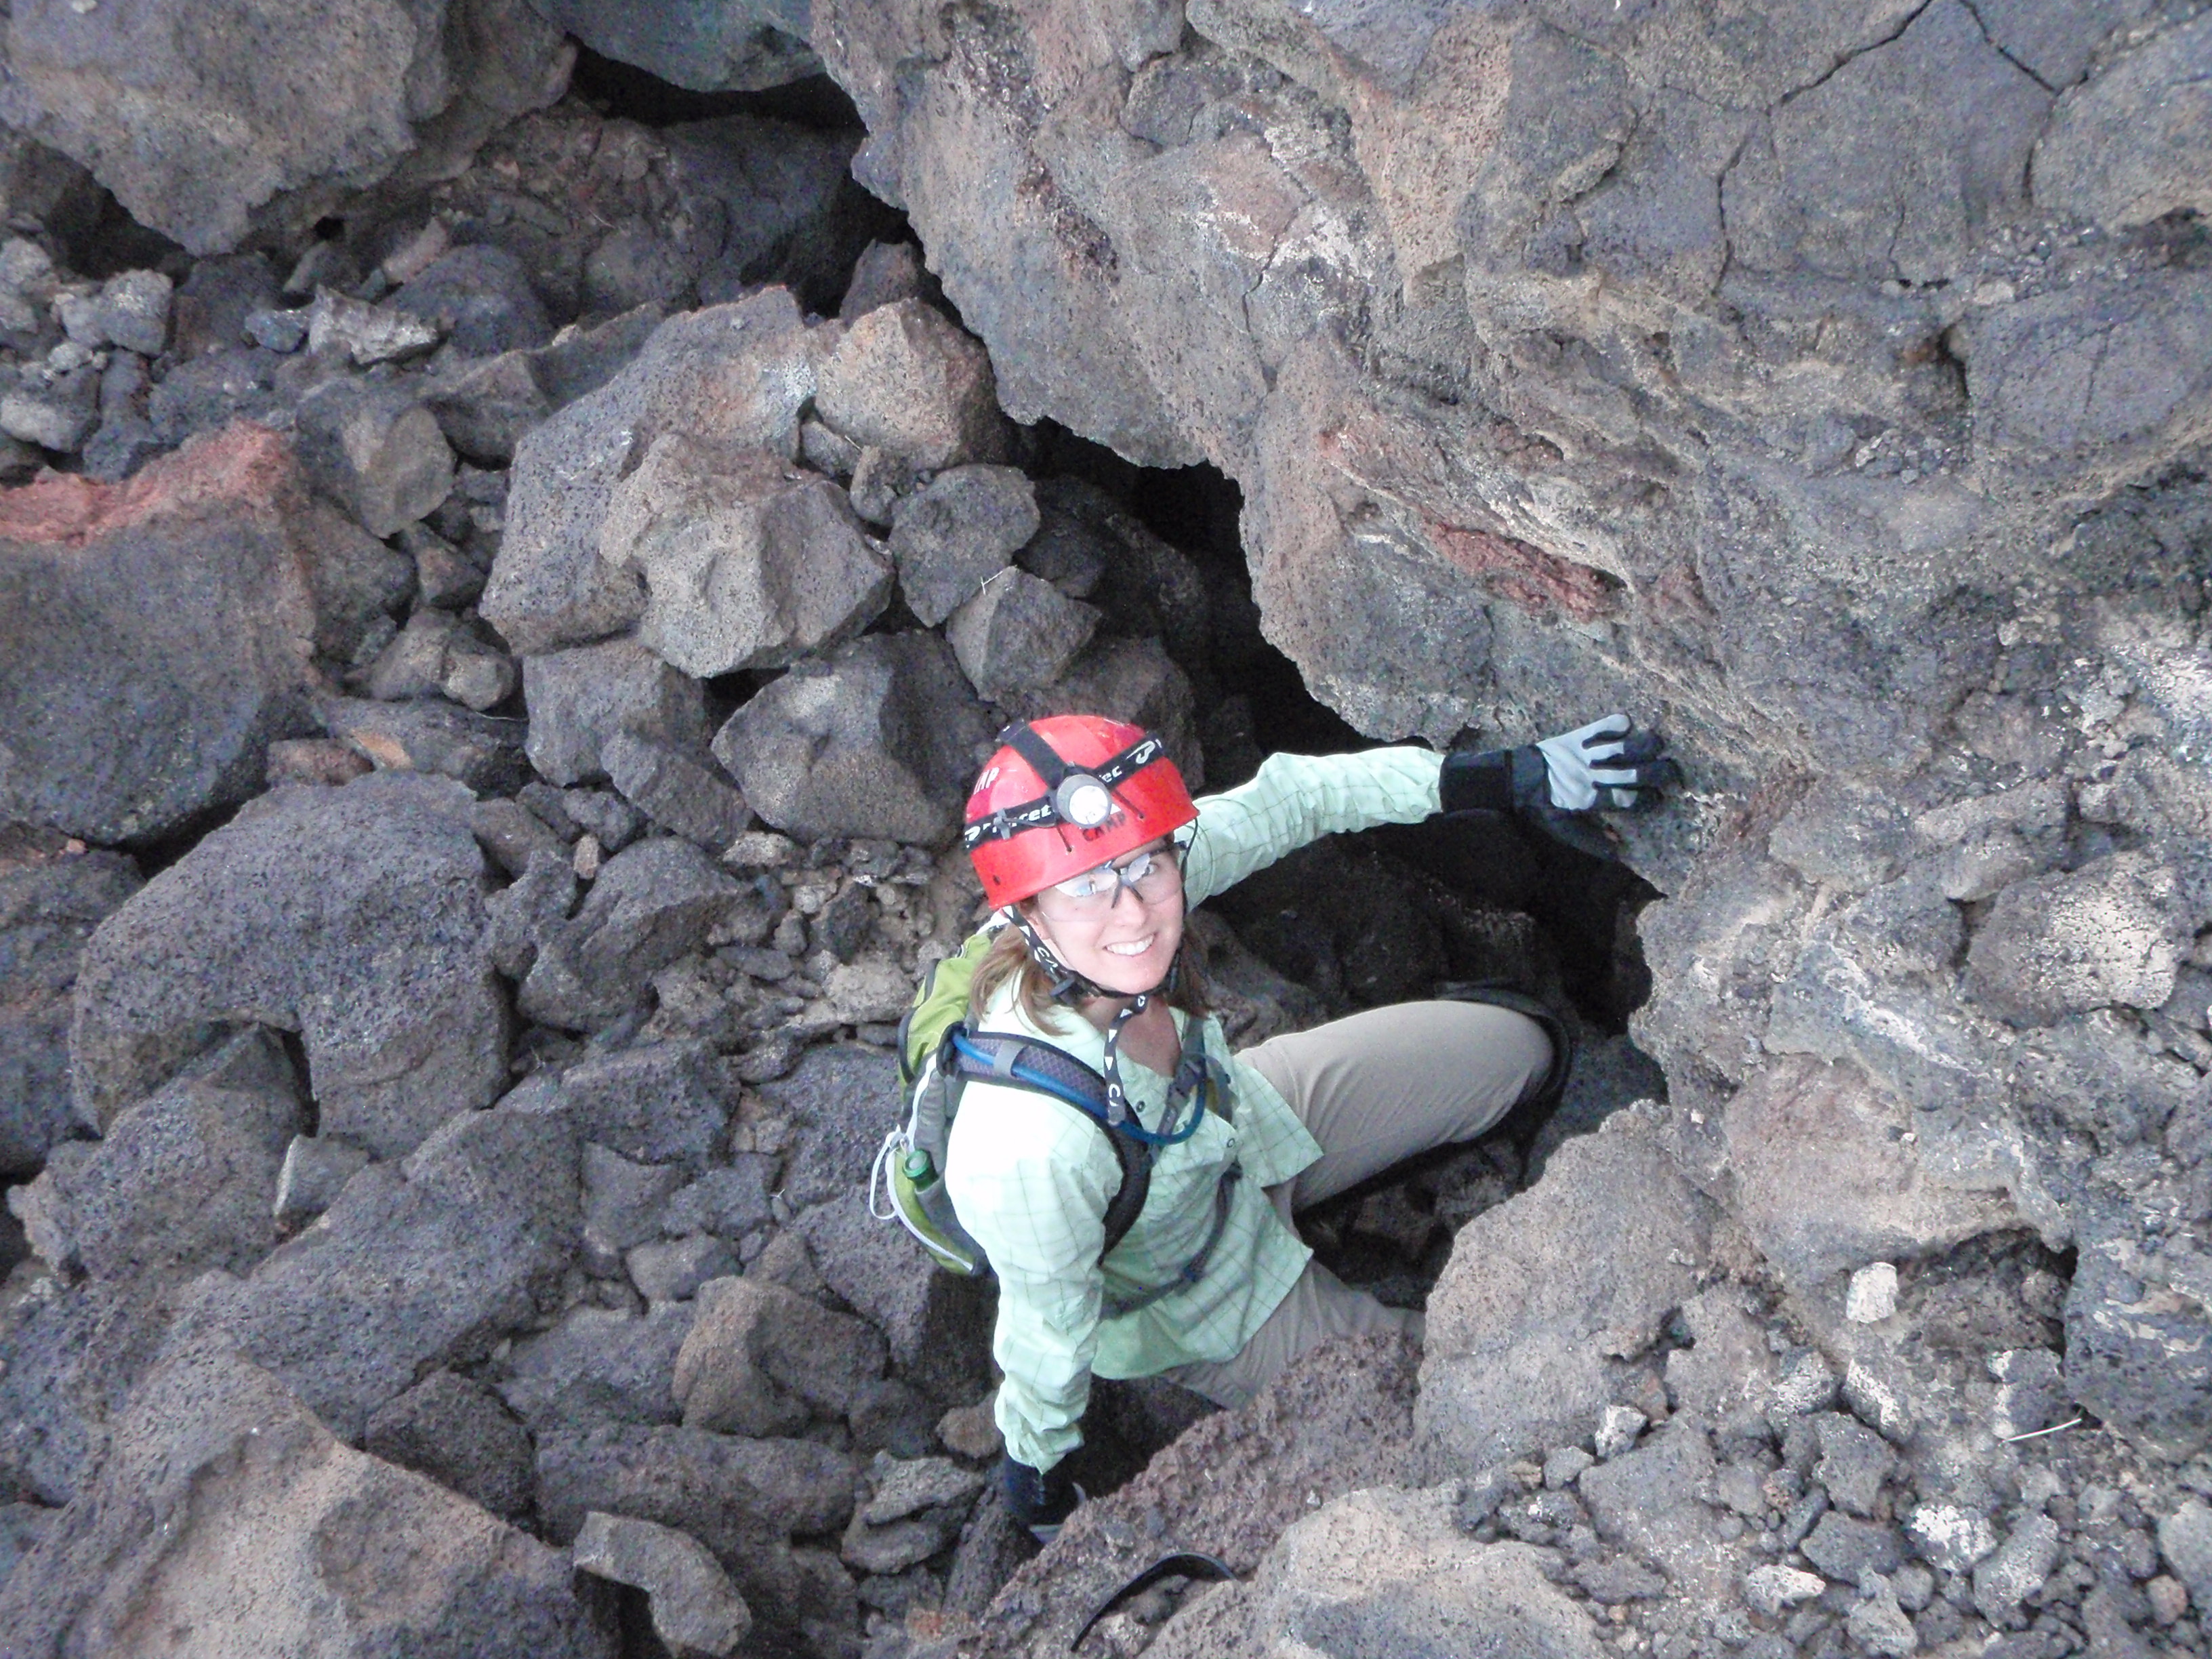 Morgan Cable explores the Pisgah Lava Tube in California's Mojave Desert. 